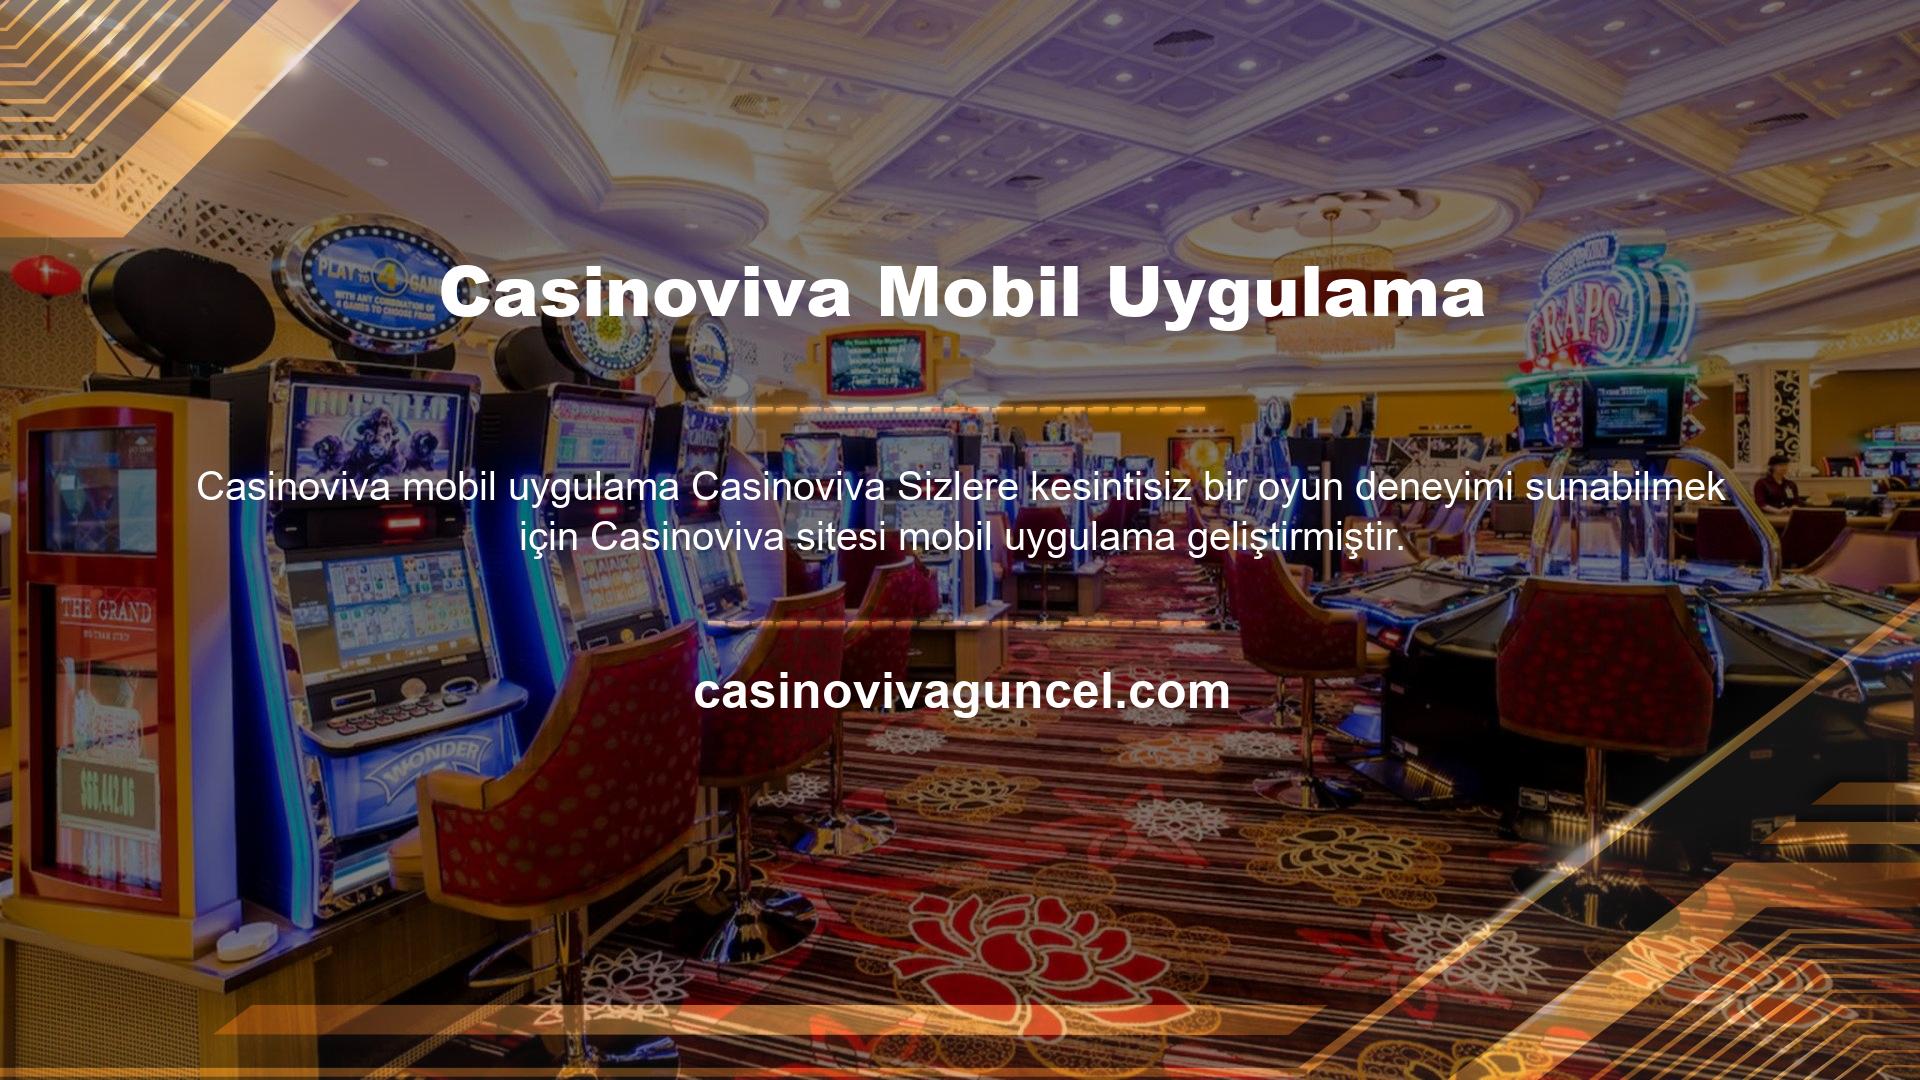 Casinoviva Mobil Uygulama